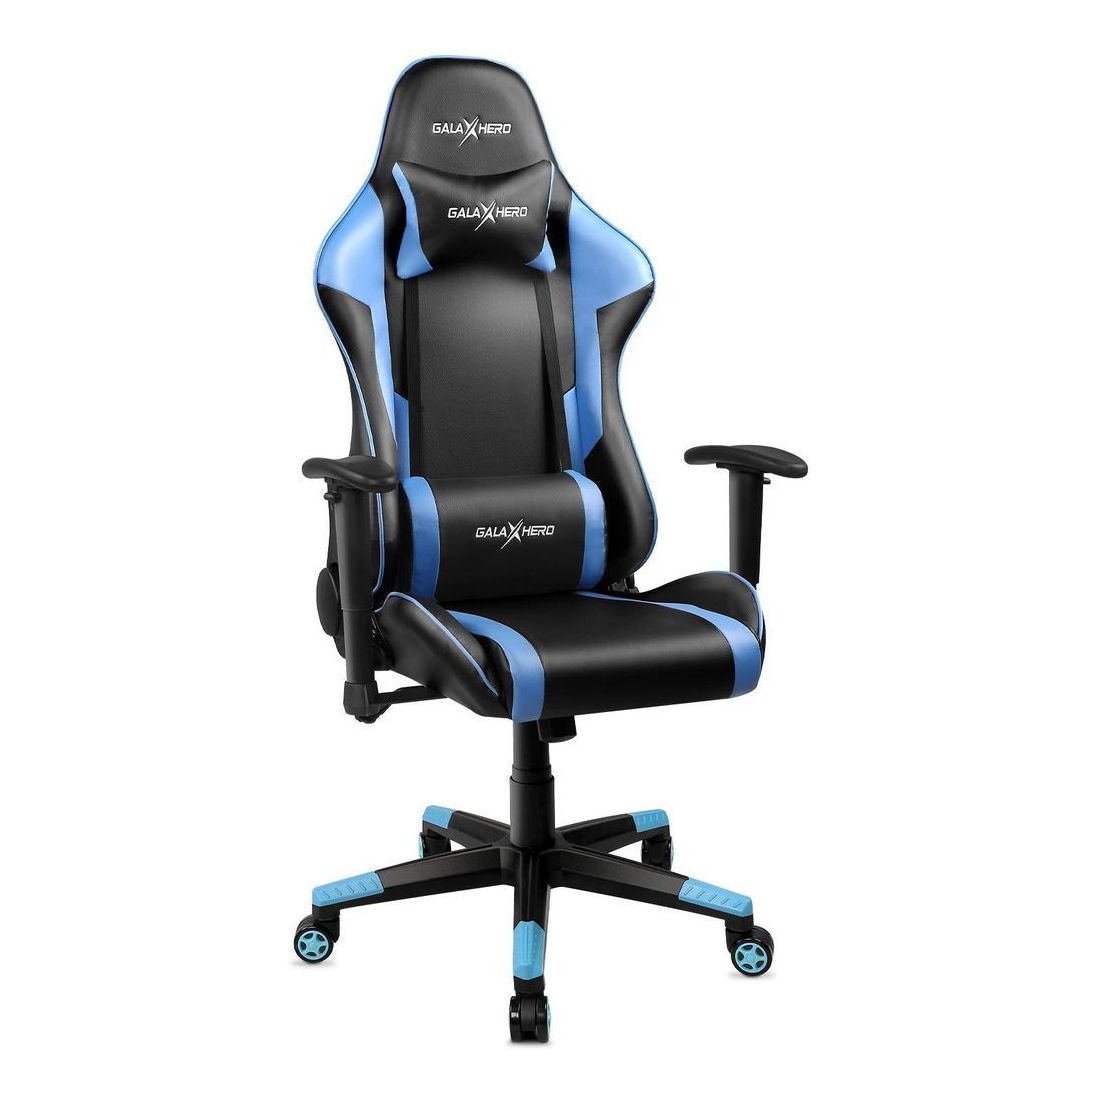 Galaxhero Gh-002 Black/Blue Gaming Chair